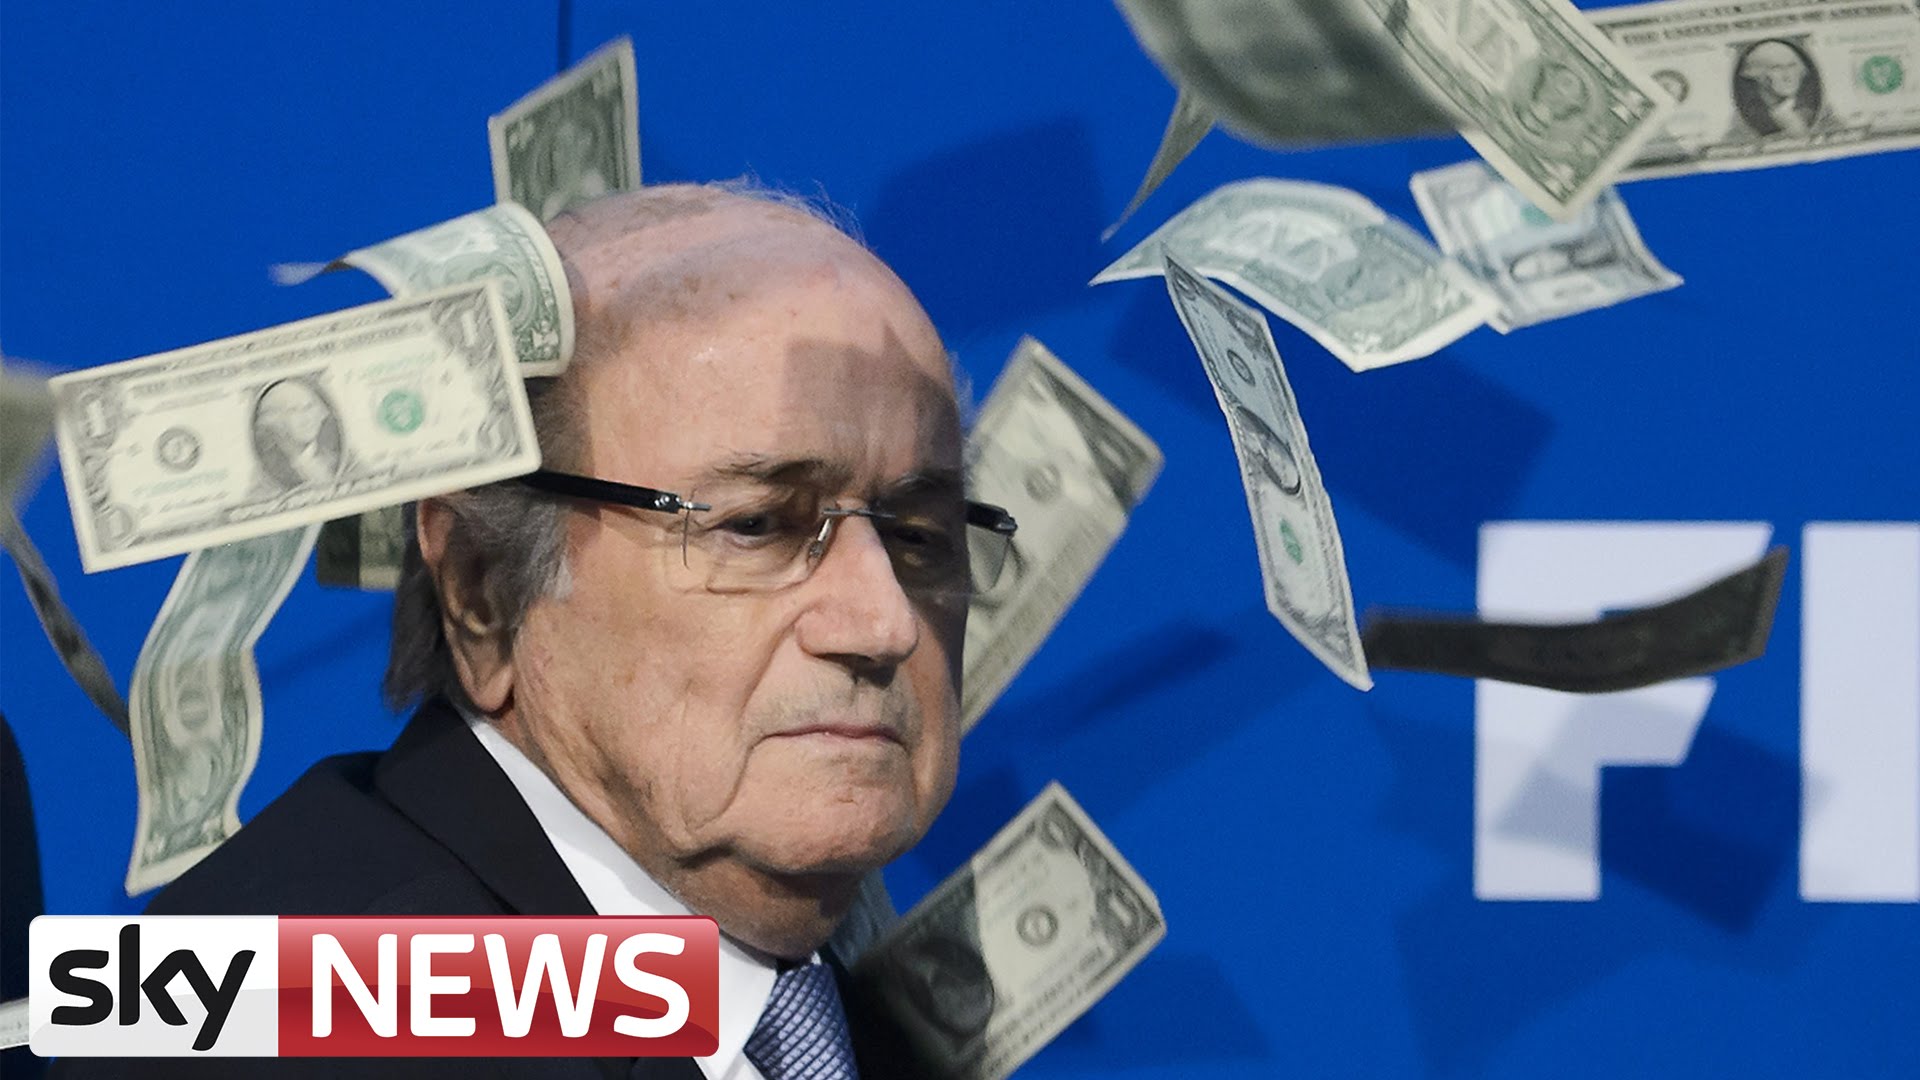 Comedian Simon Brodkin showers FIFA President Sepp Blatter with cash